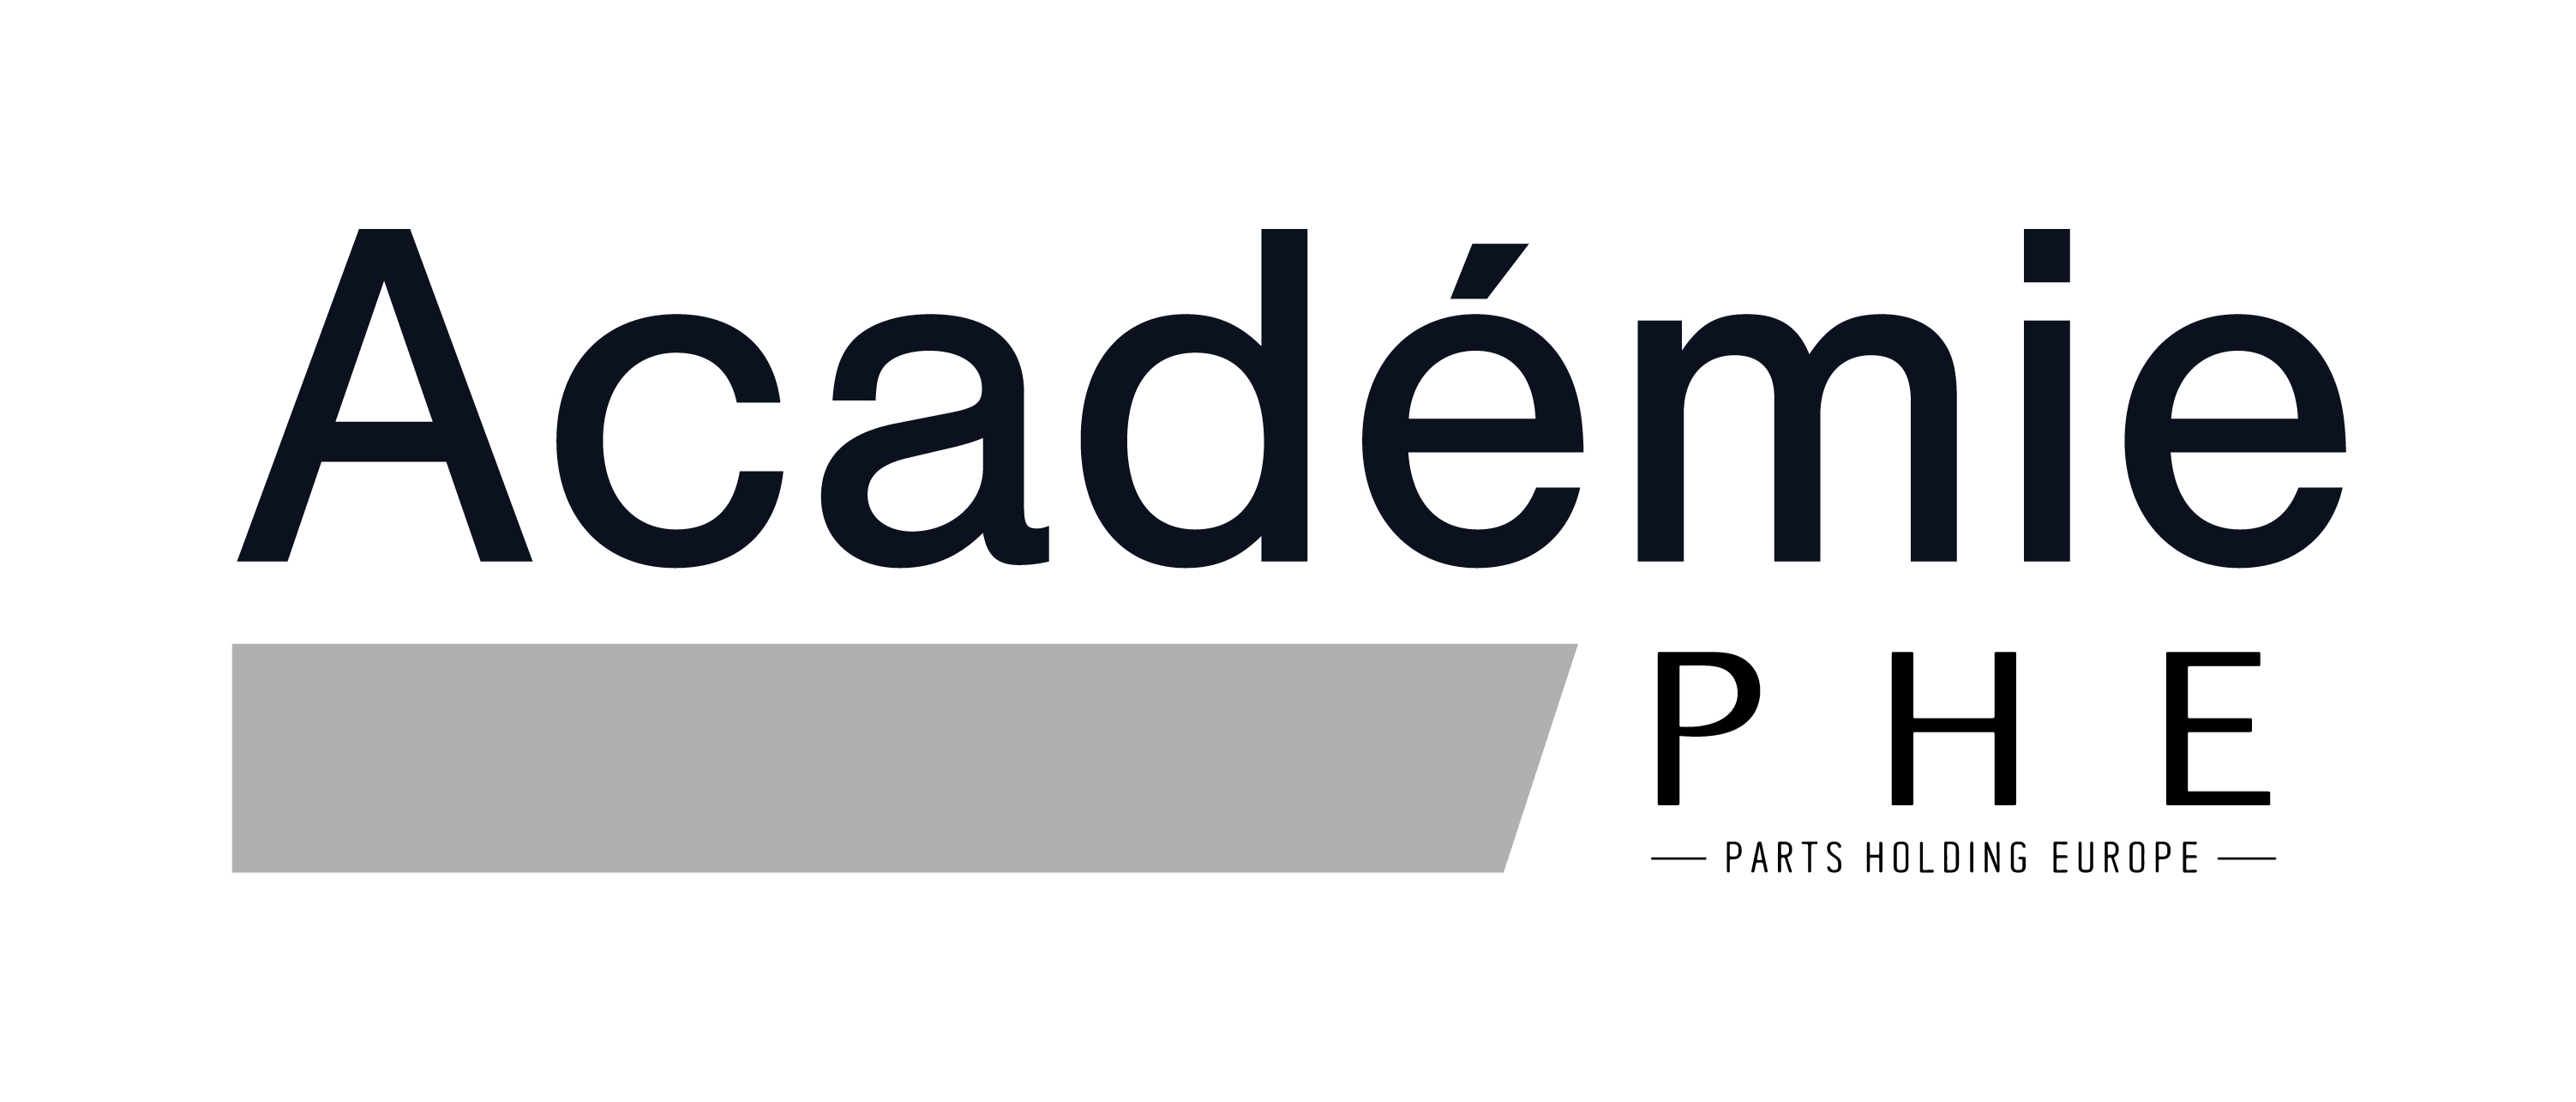 phe-academie logo